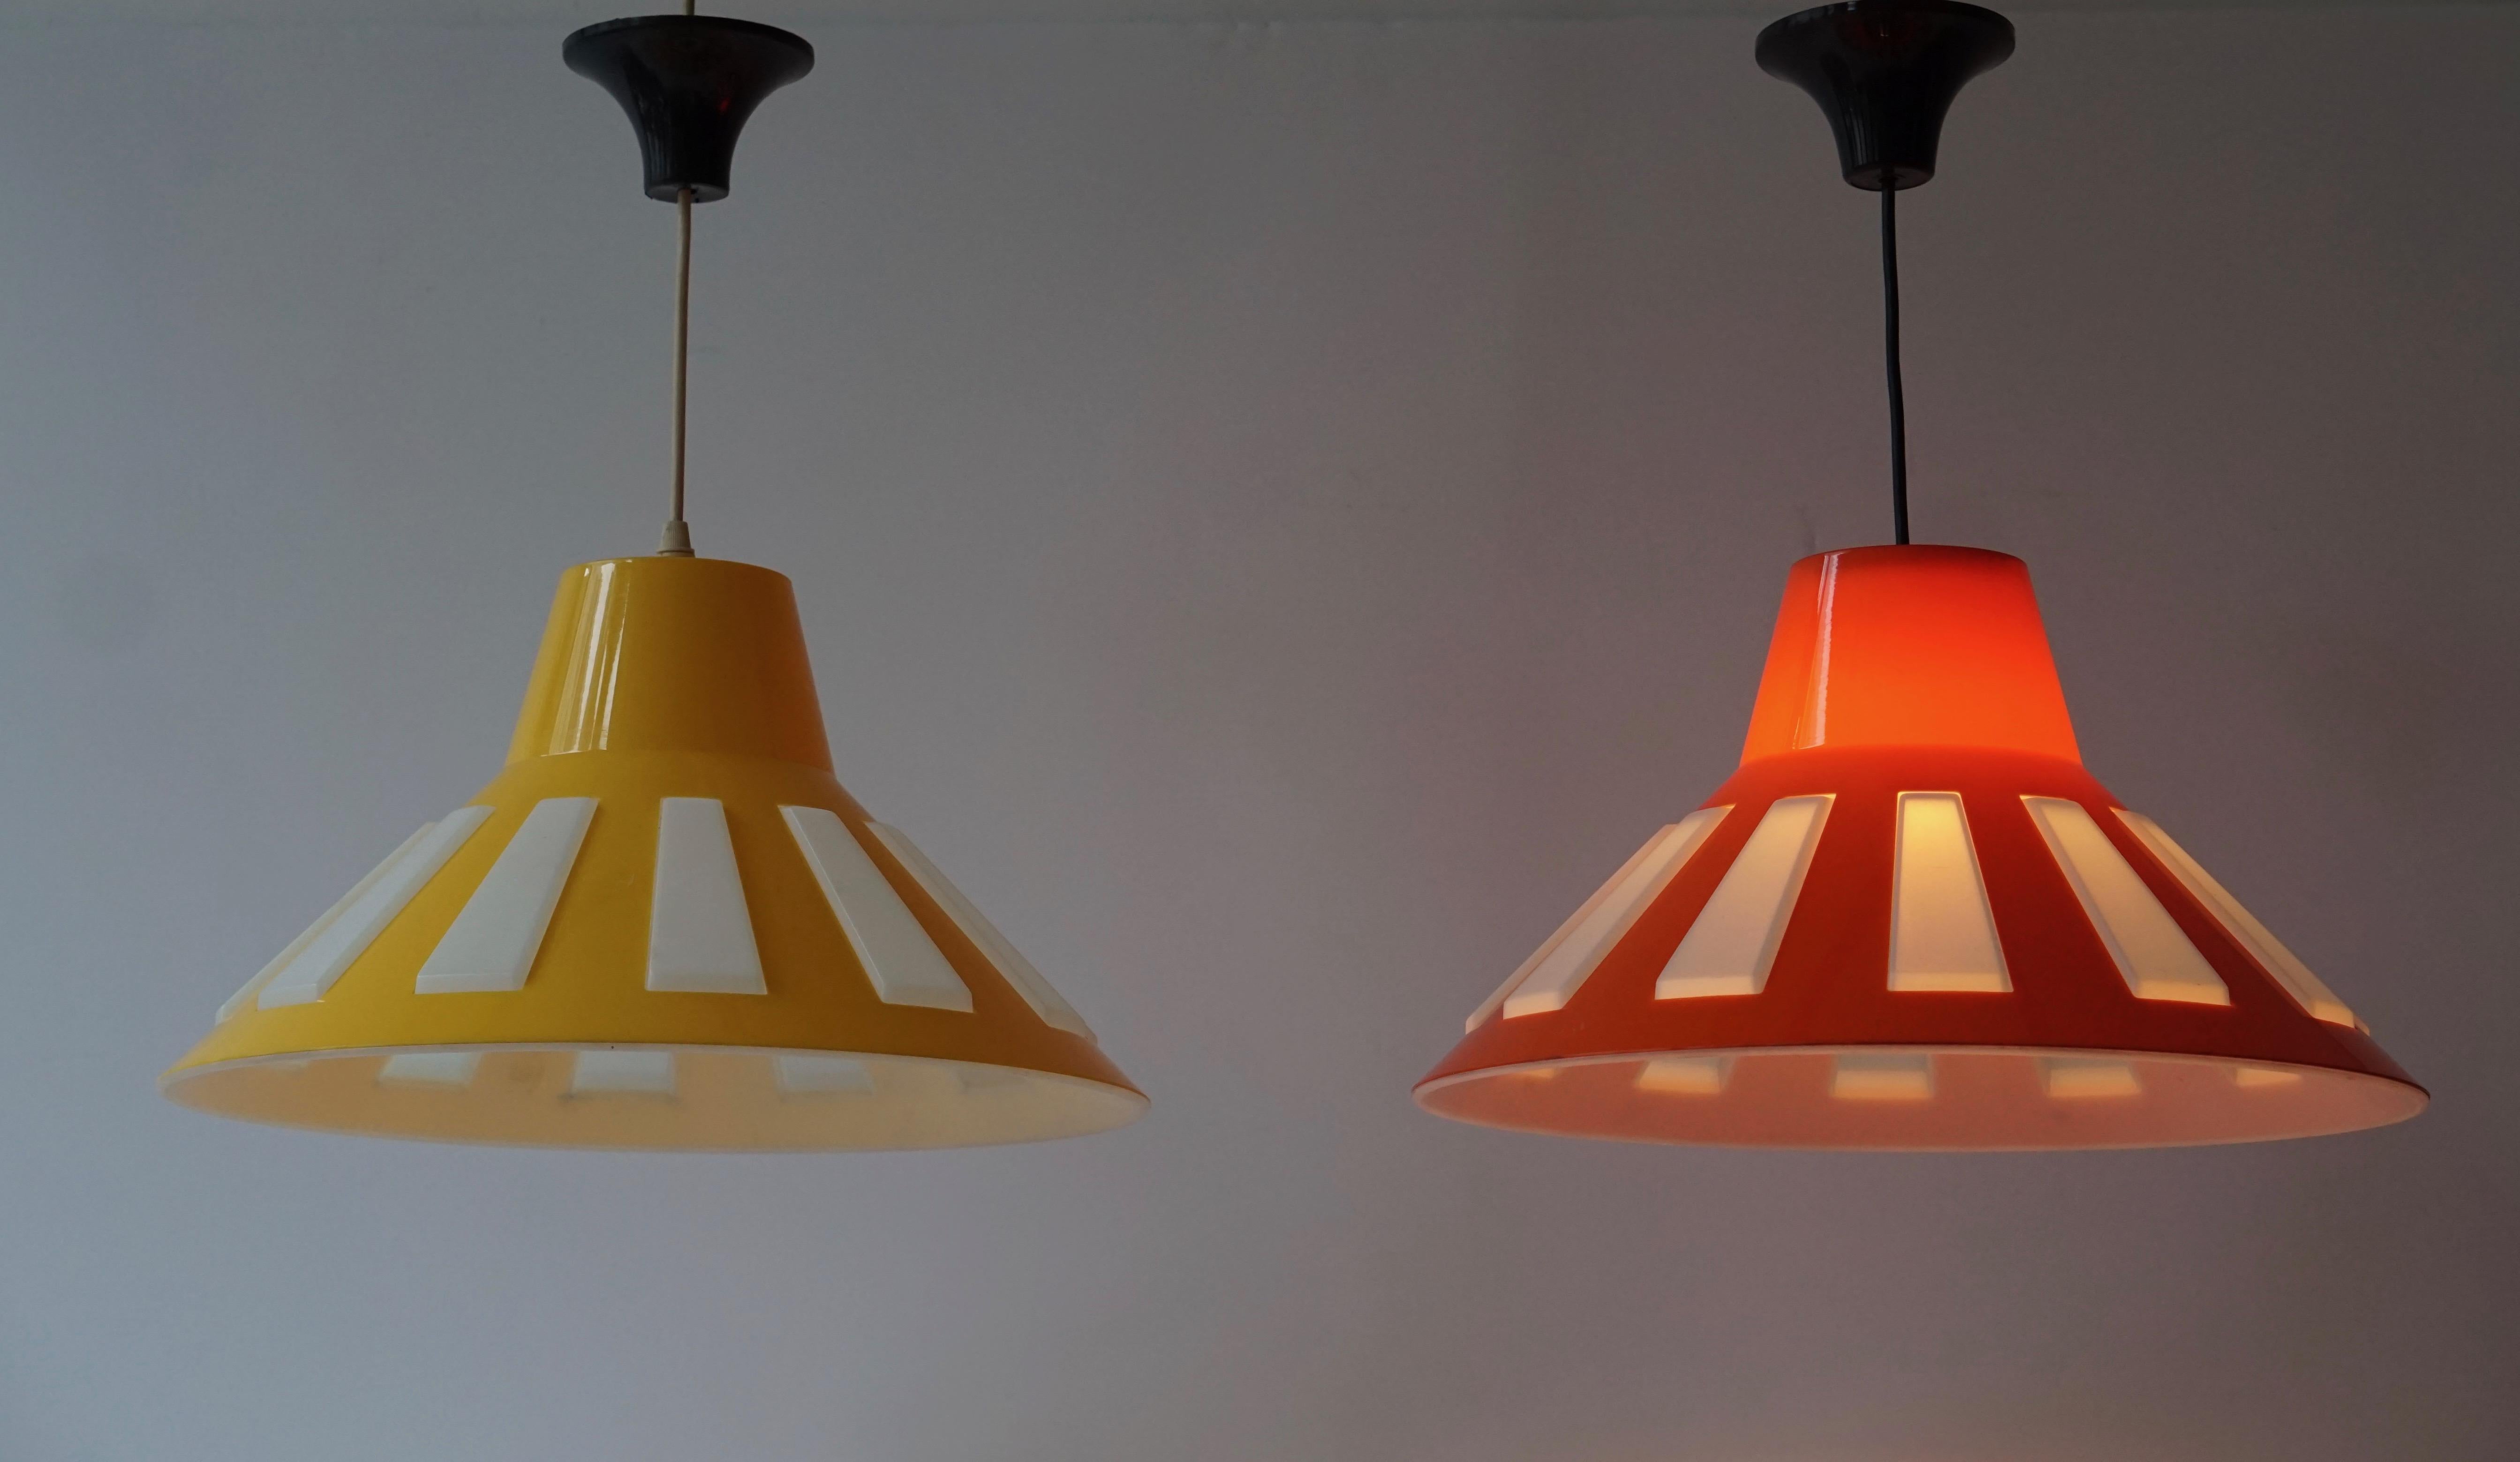 Two Italian ceiling lights in yellow and orange plastic.
Measures: Diameter 40 cm.
Height fixture 22 cm. Total height 70 cm.